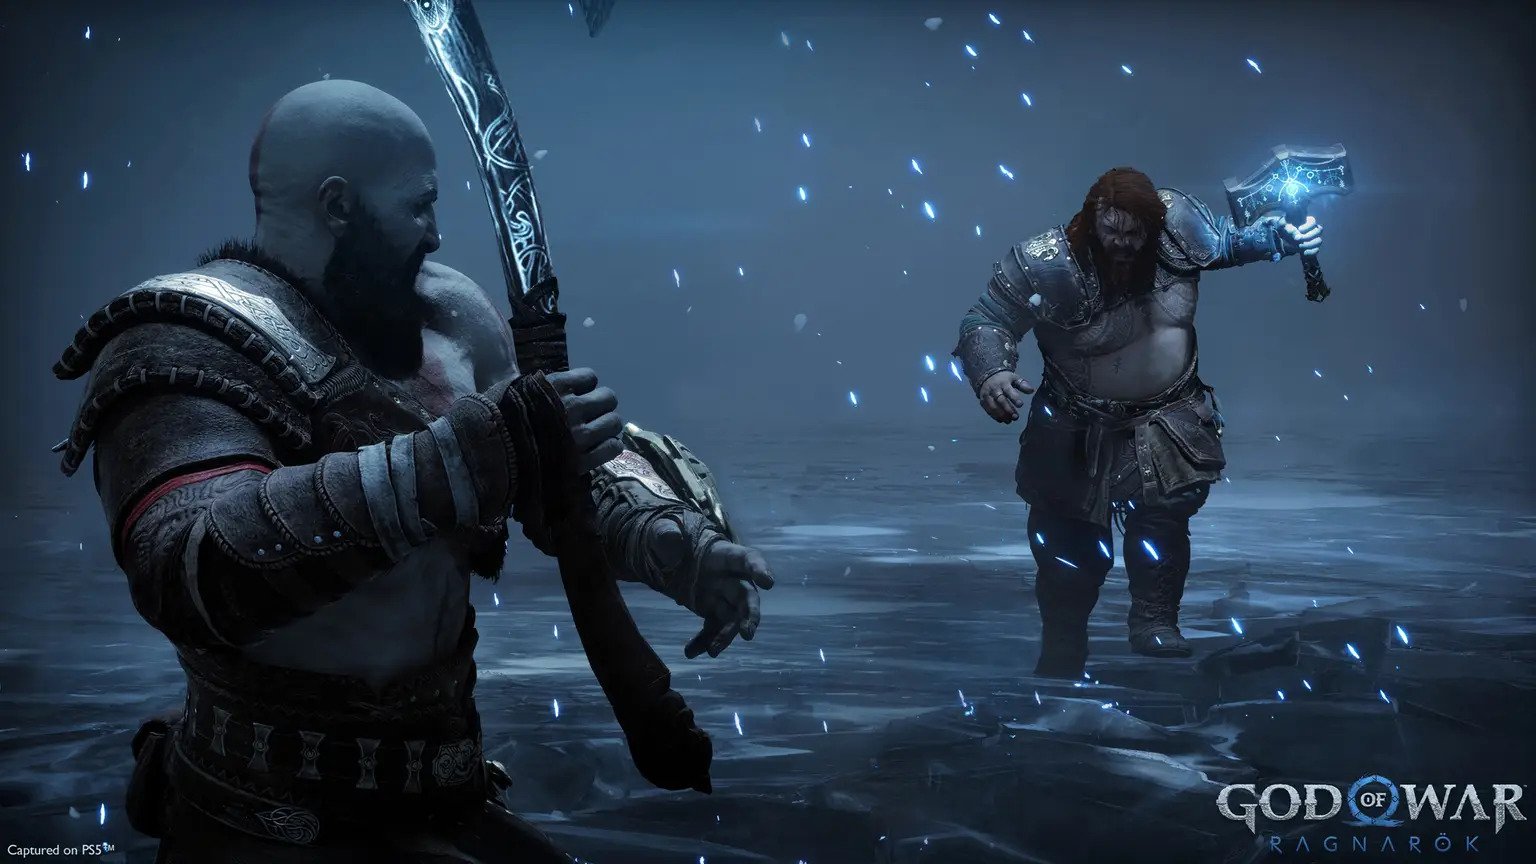 God of War Ragnarök story trailer takes you on a journey across the realms